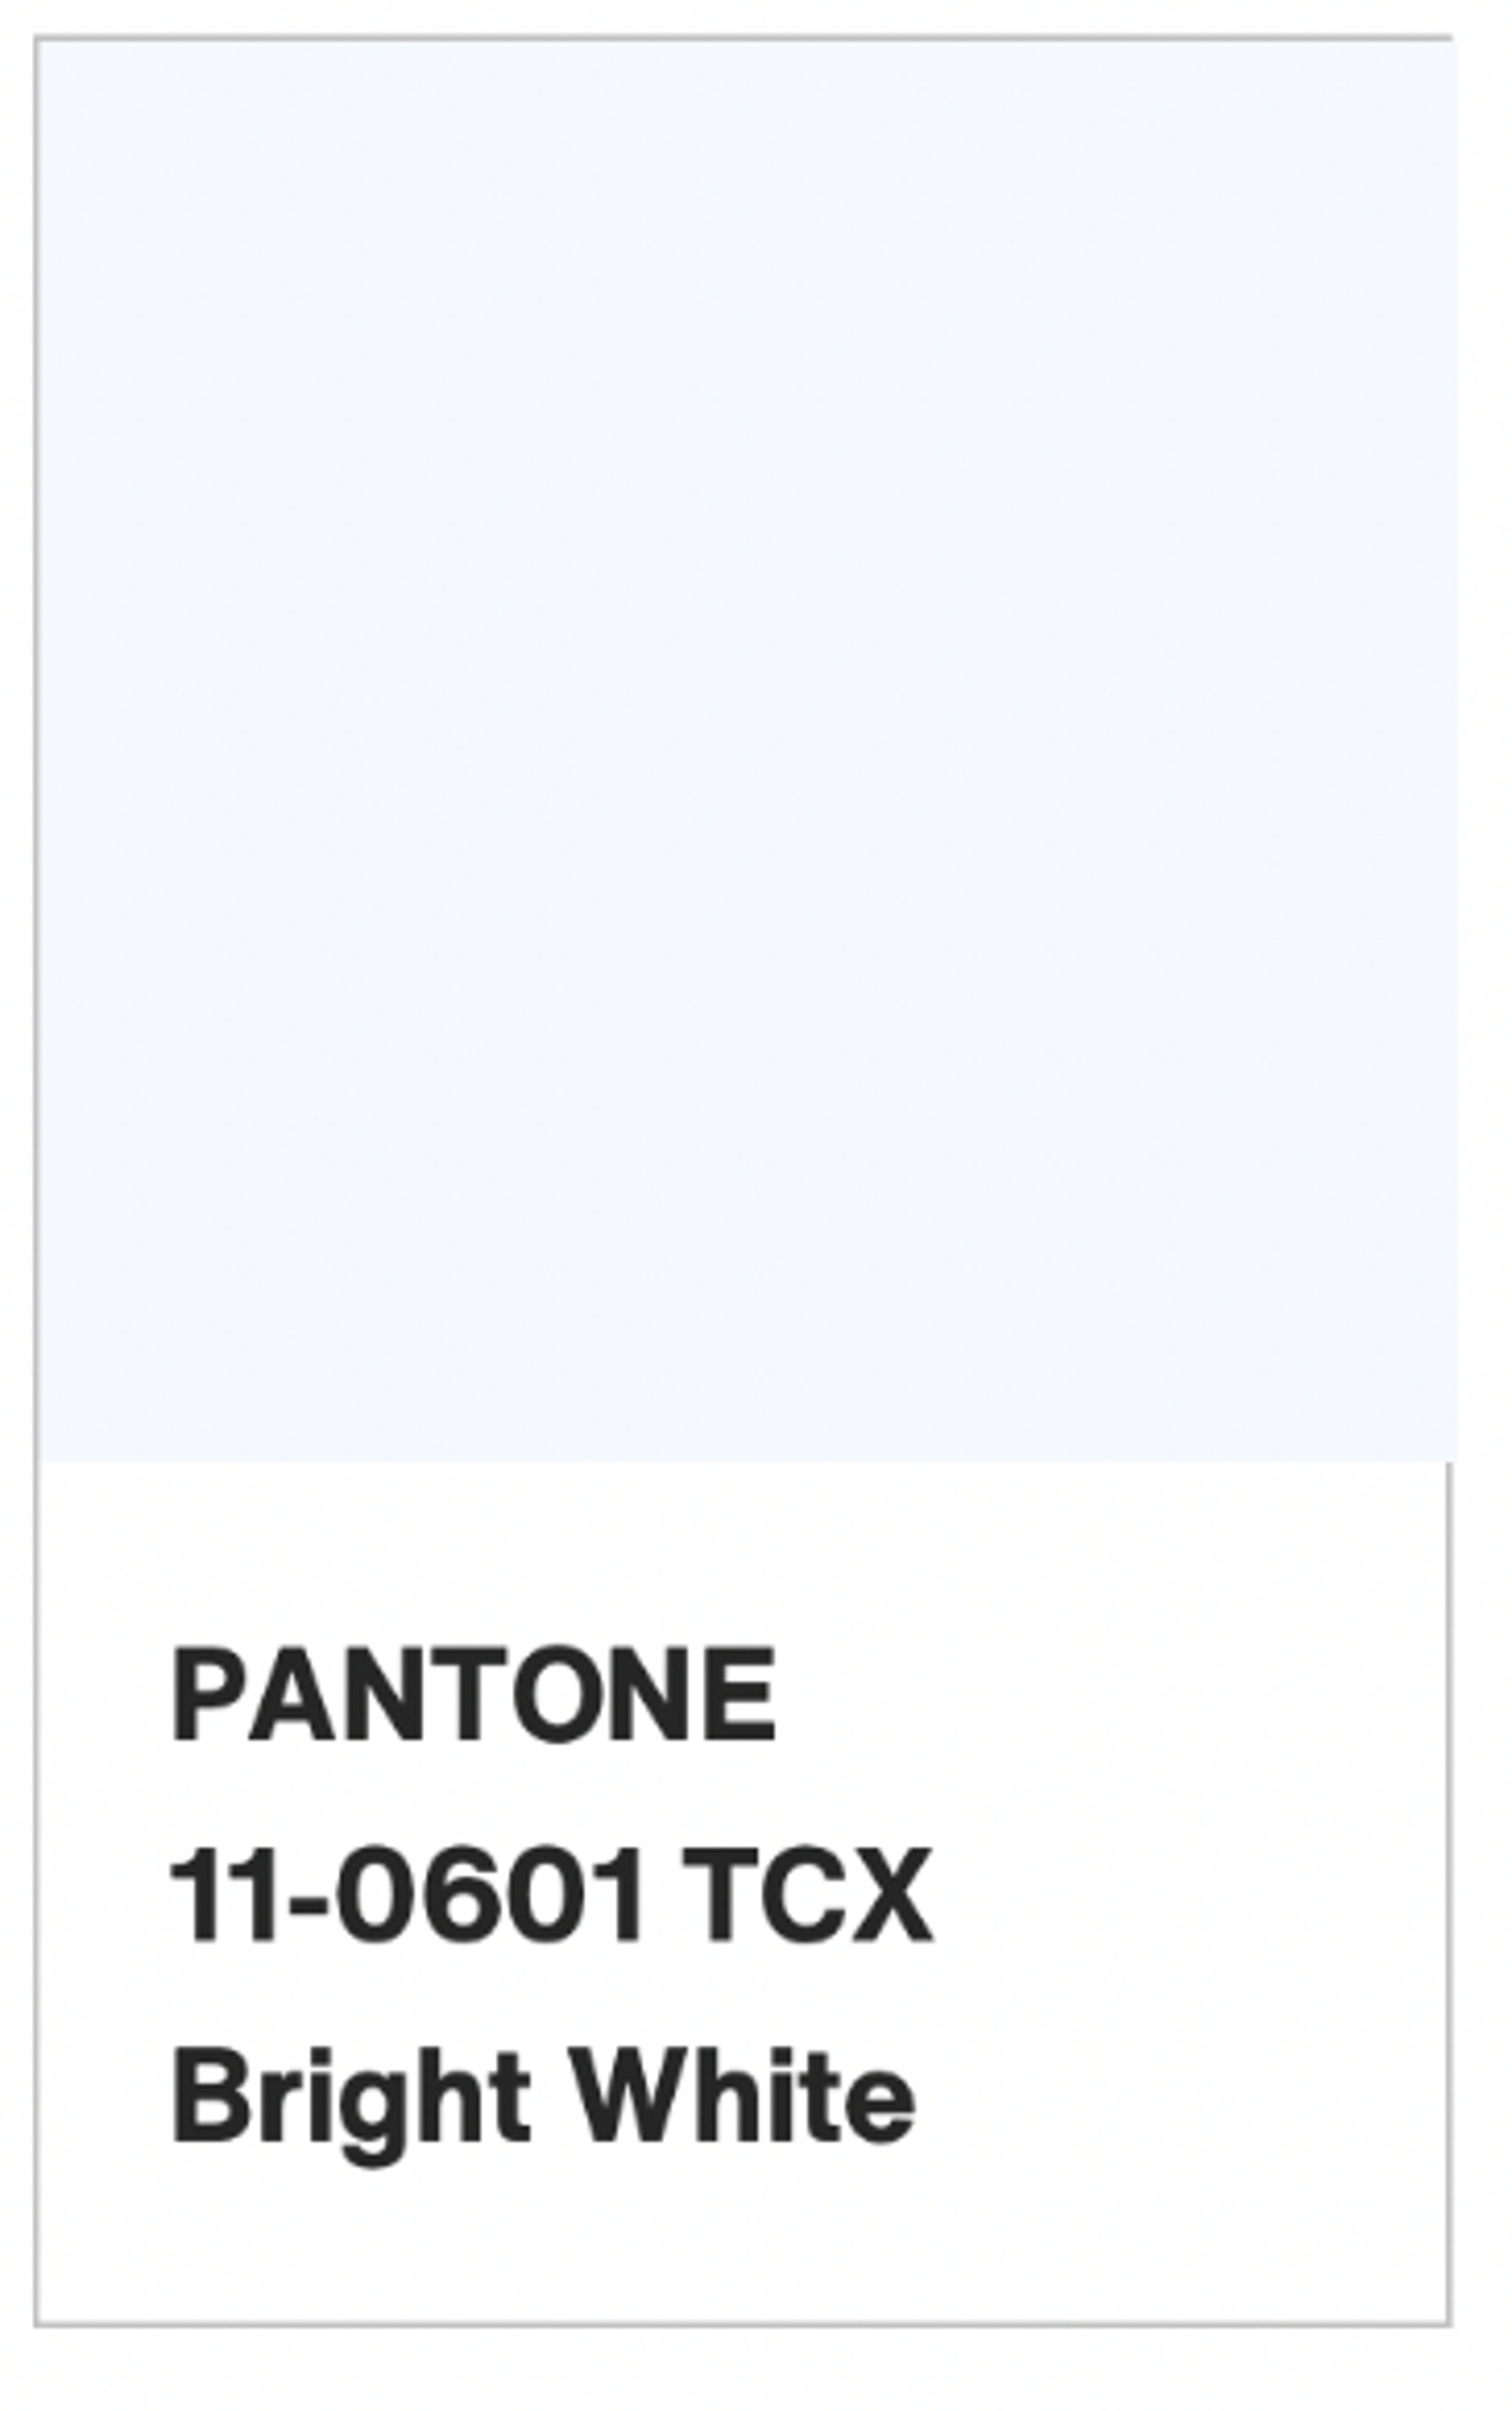 Pantone 11-0601 TCX Pop by Betsy Enzensberger